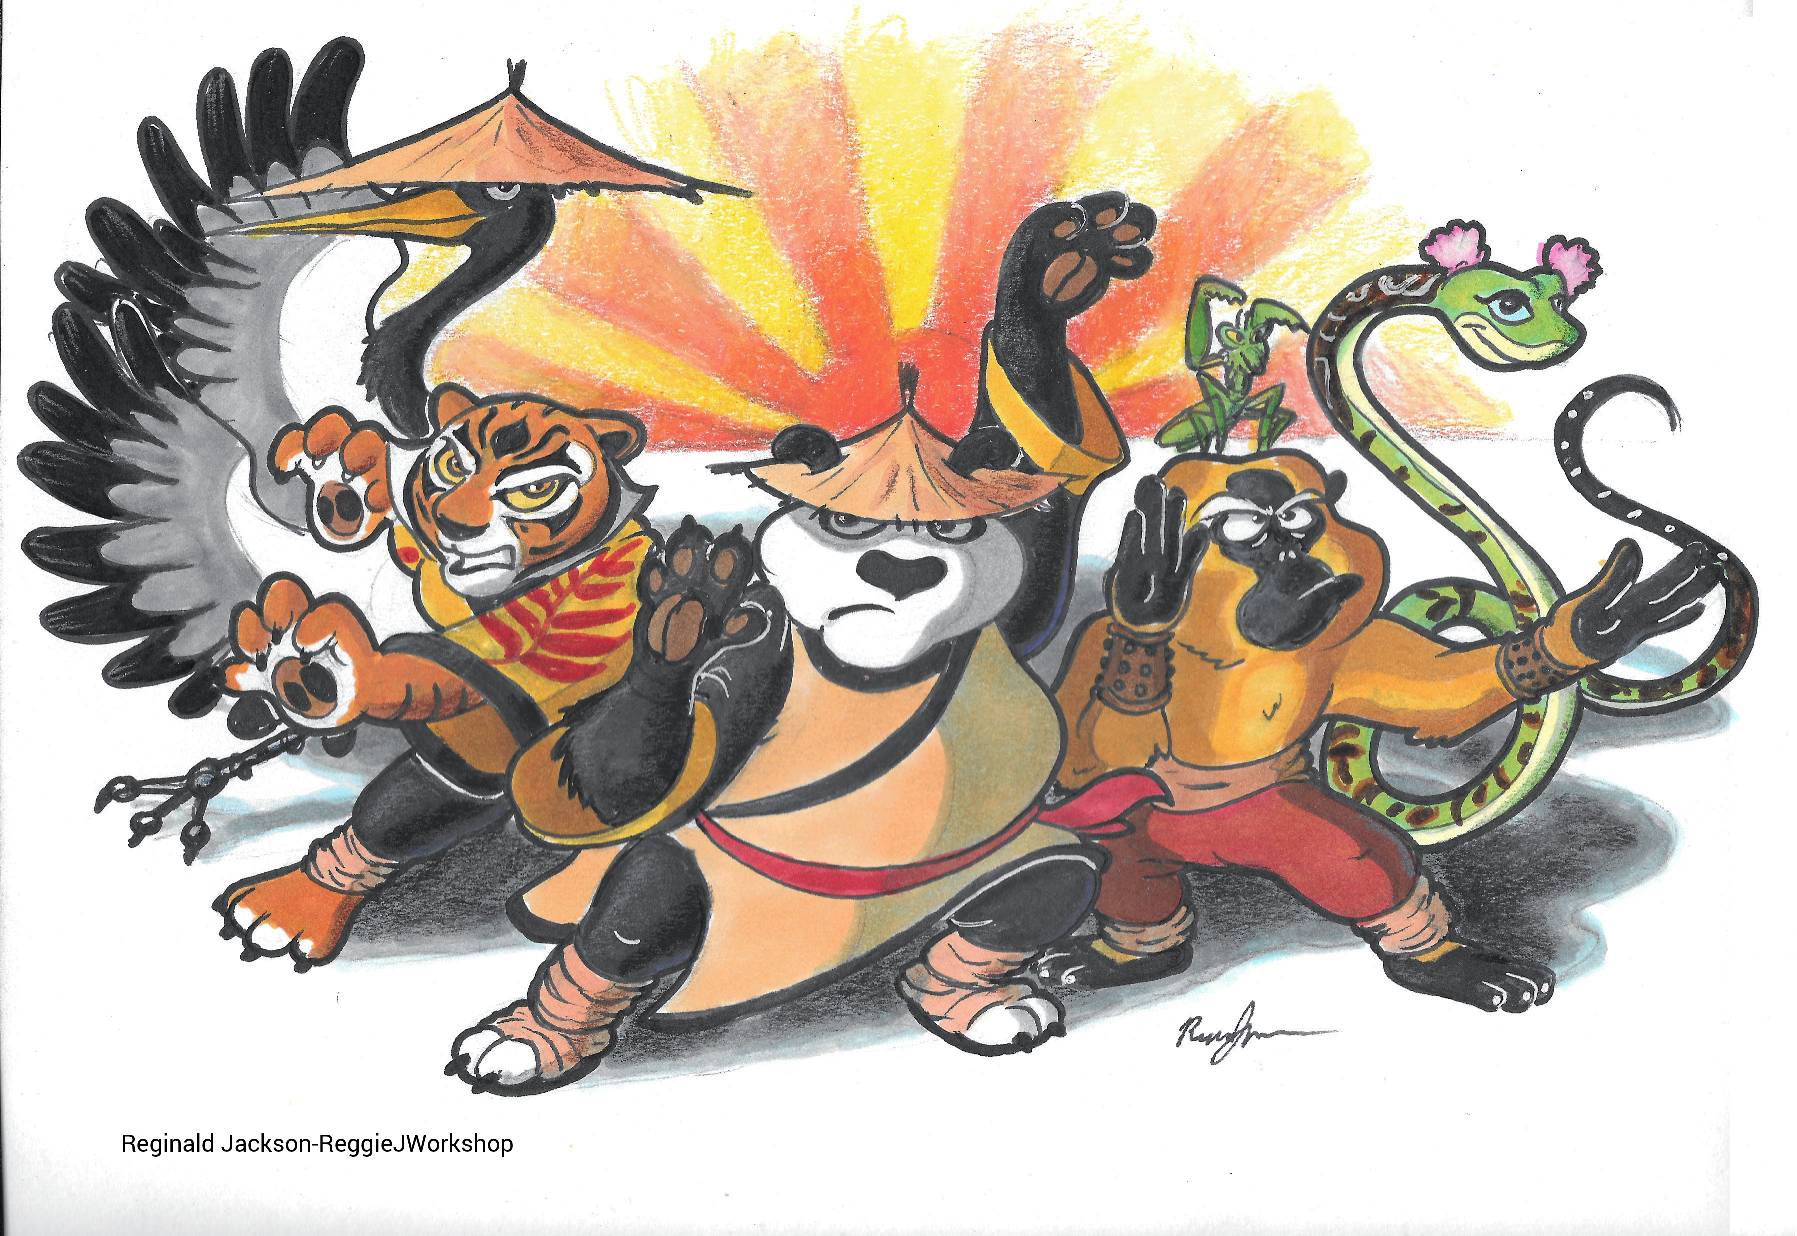 Kung Fu Panda: The Dragon Warrior by EternalNeon on DeviantArt